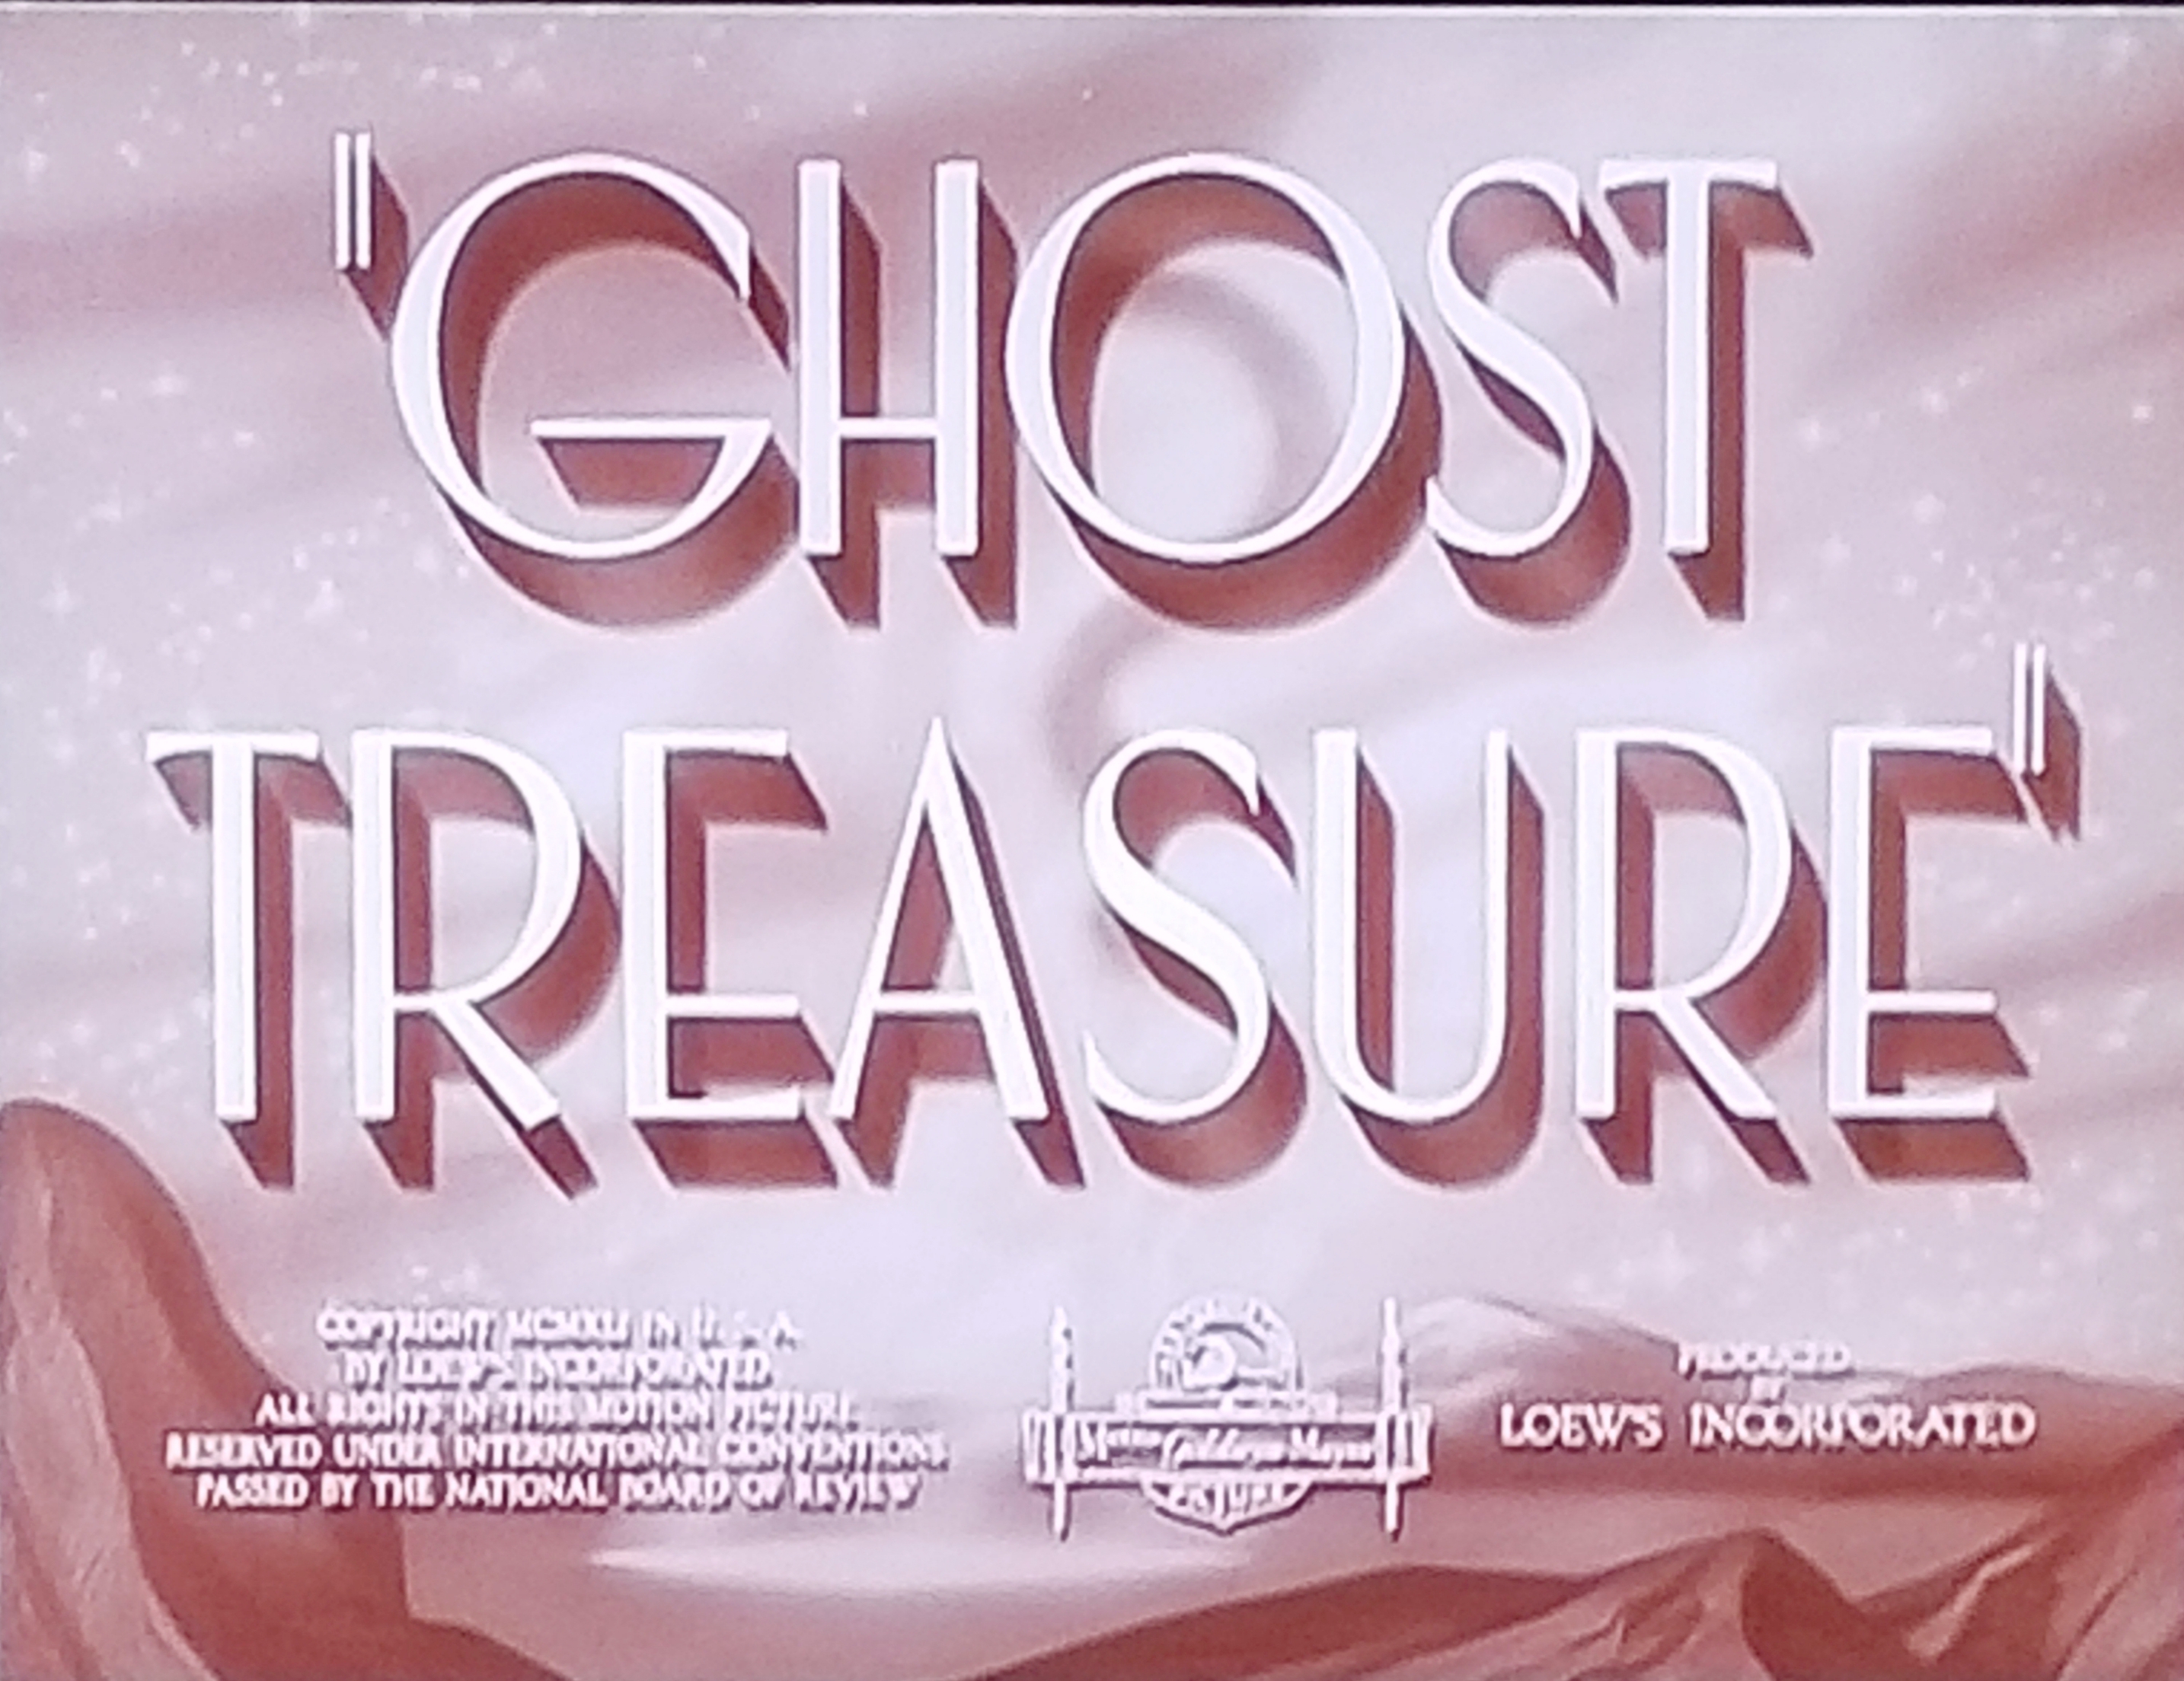 Ghost Treasure